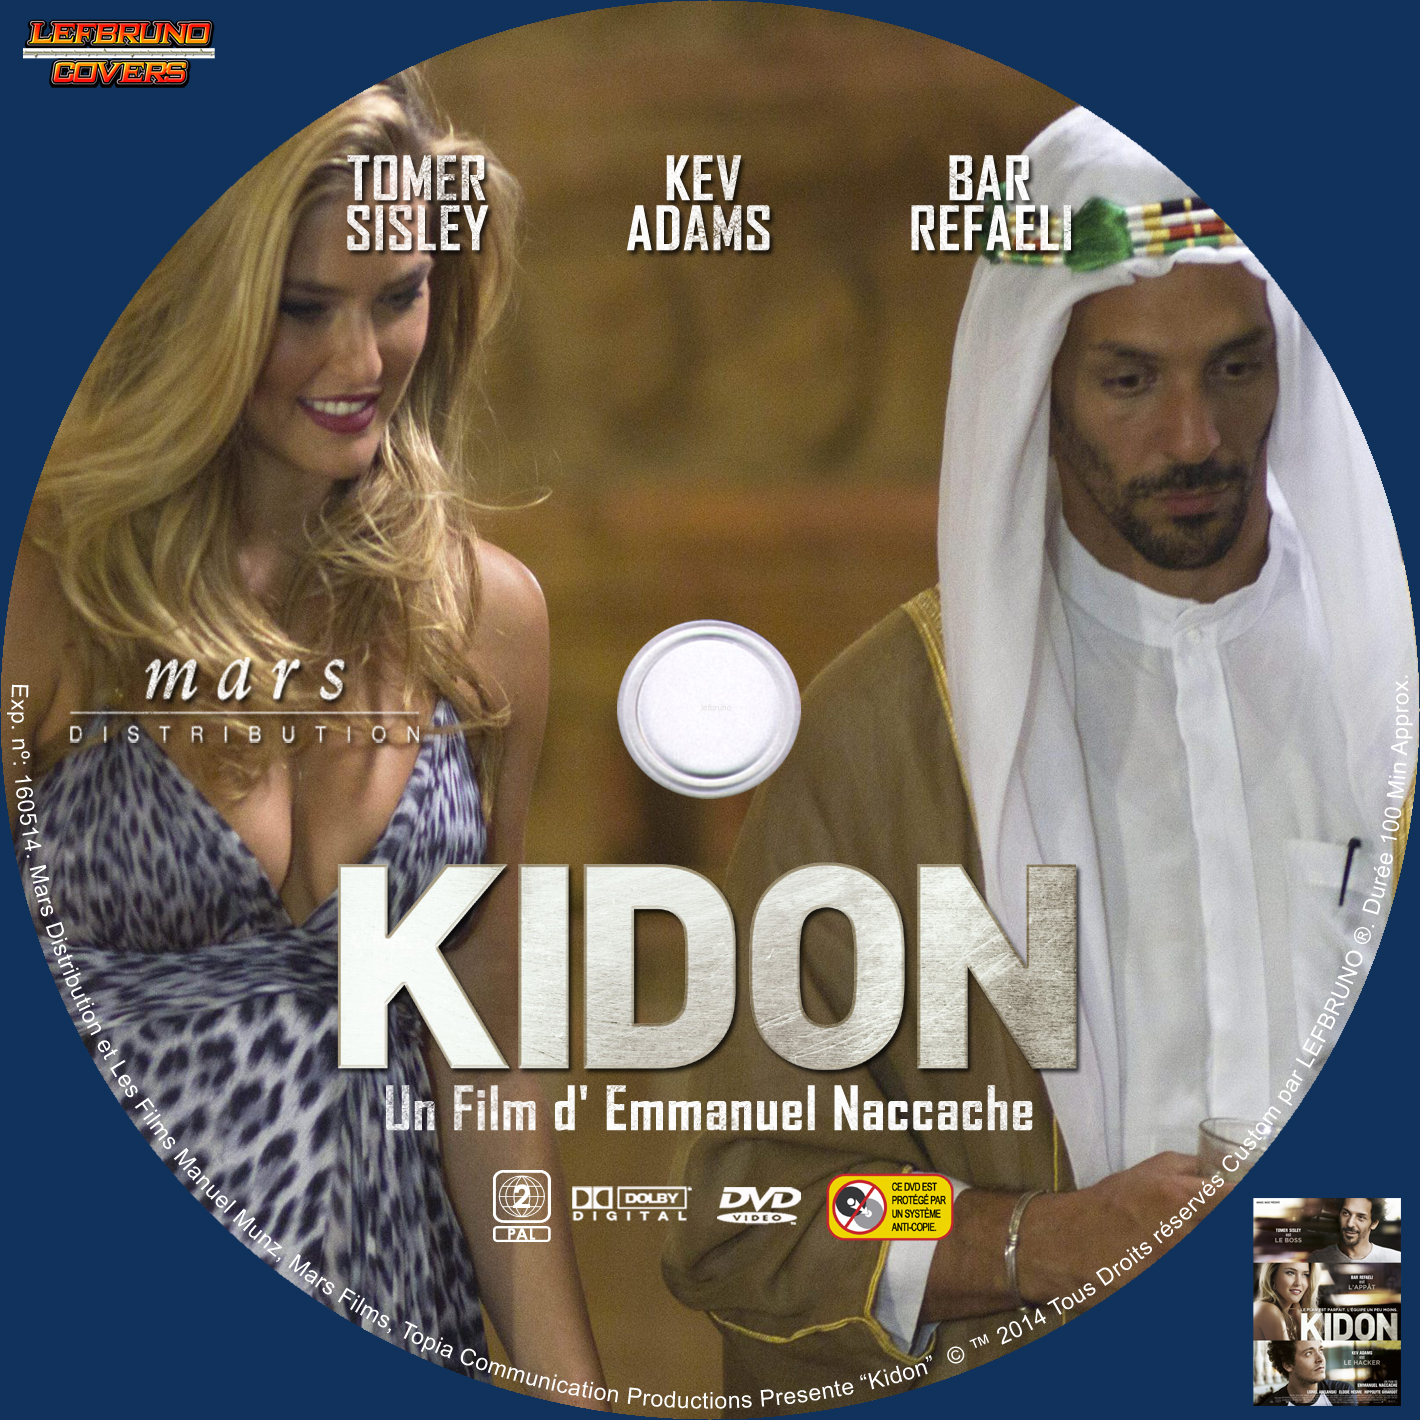 Kidon custom